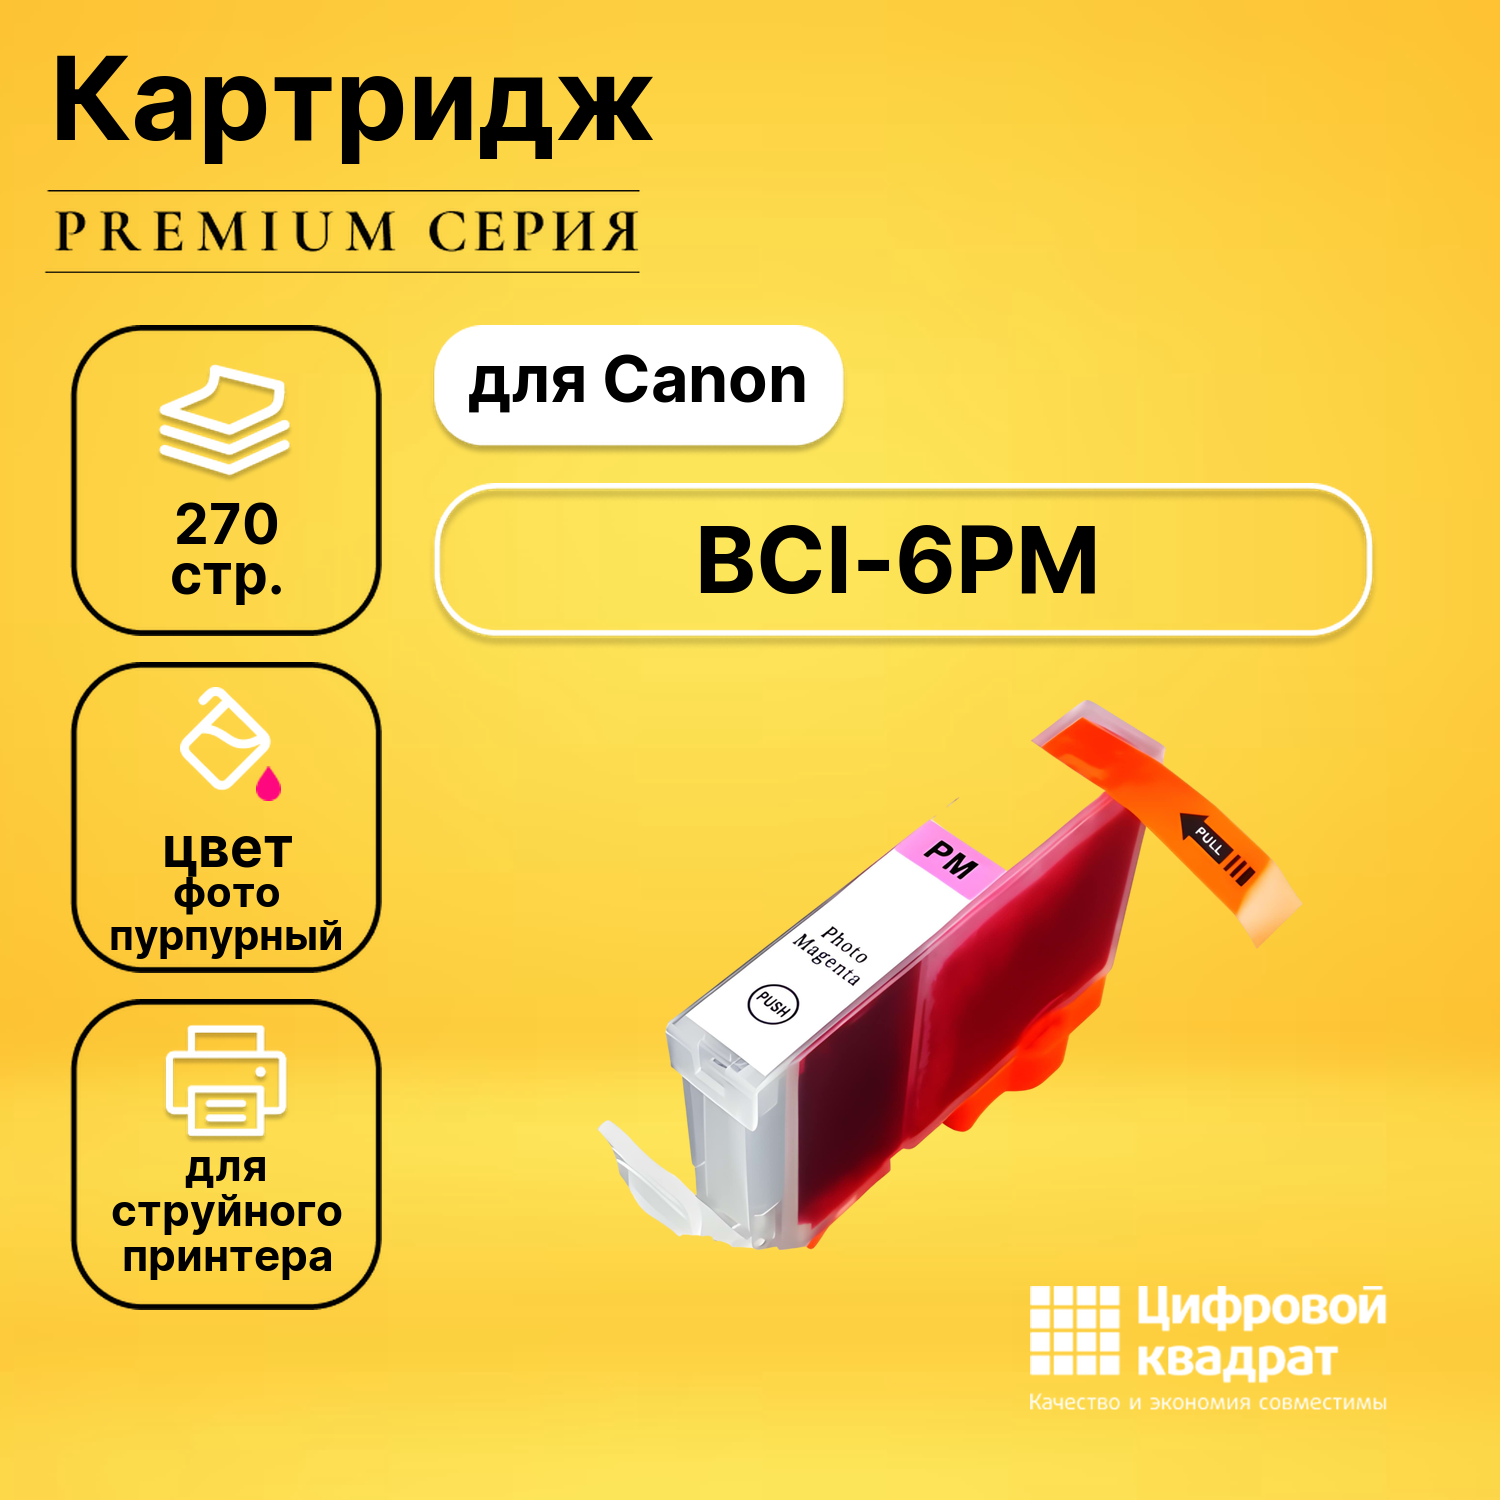 Картридж DS BCI-5PM/ BCI-6PM Canon фото-пурпурный совместимый